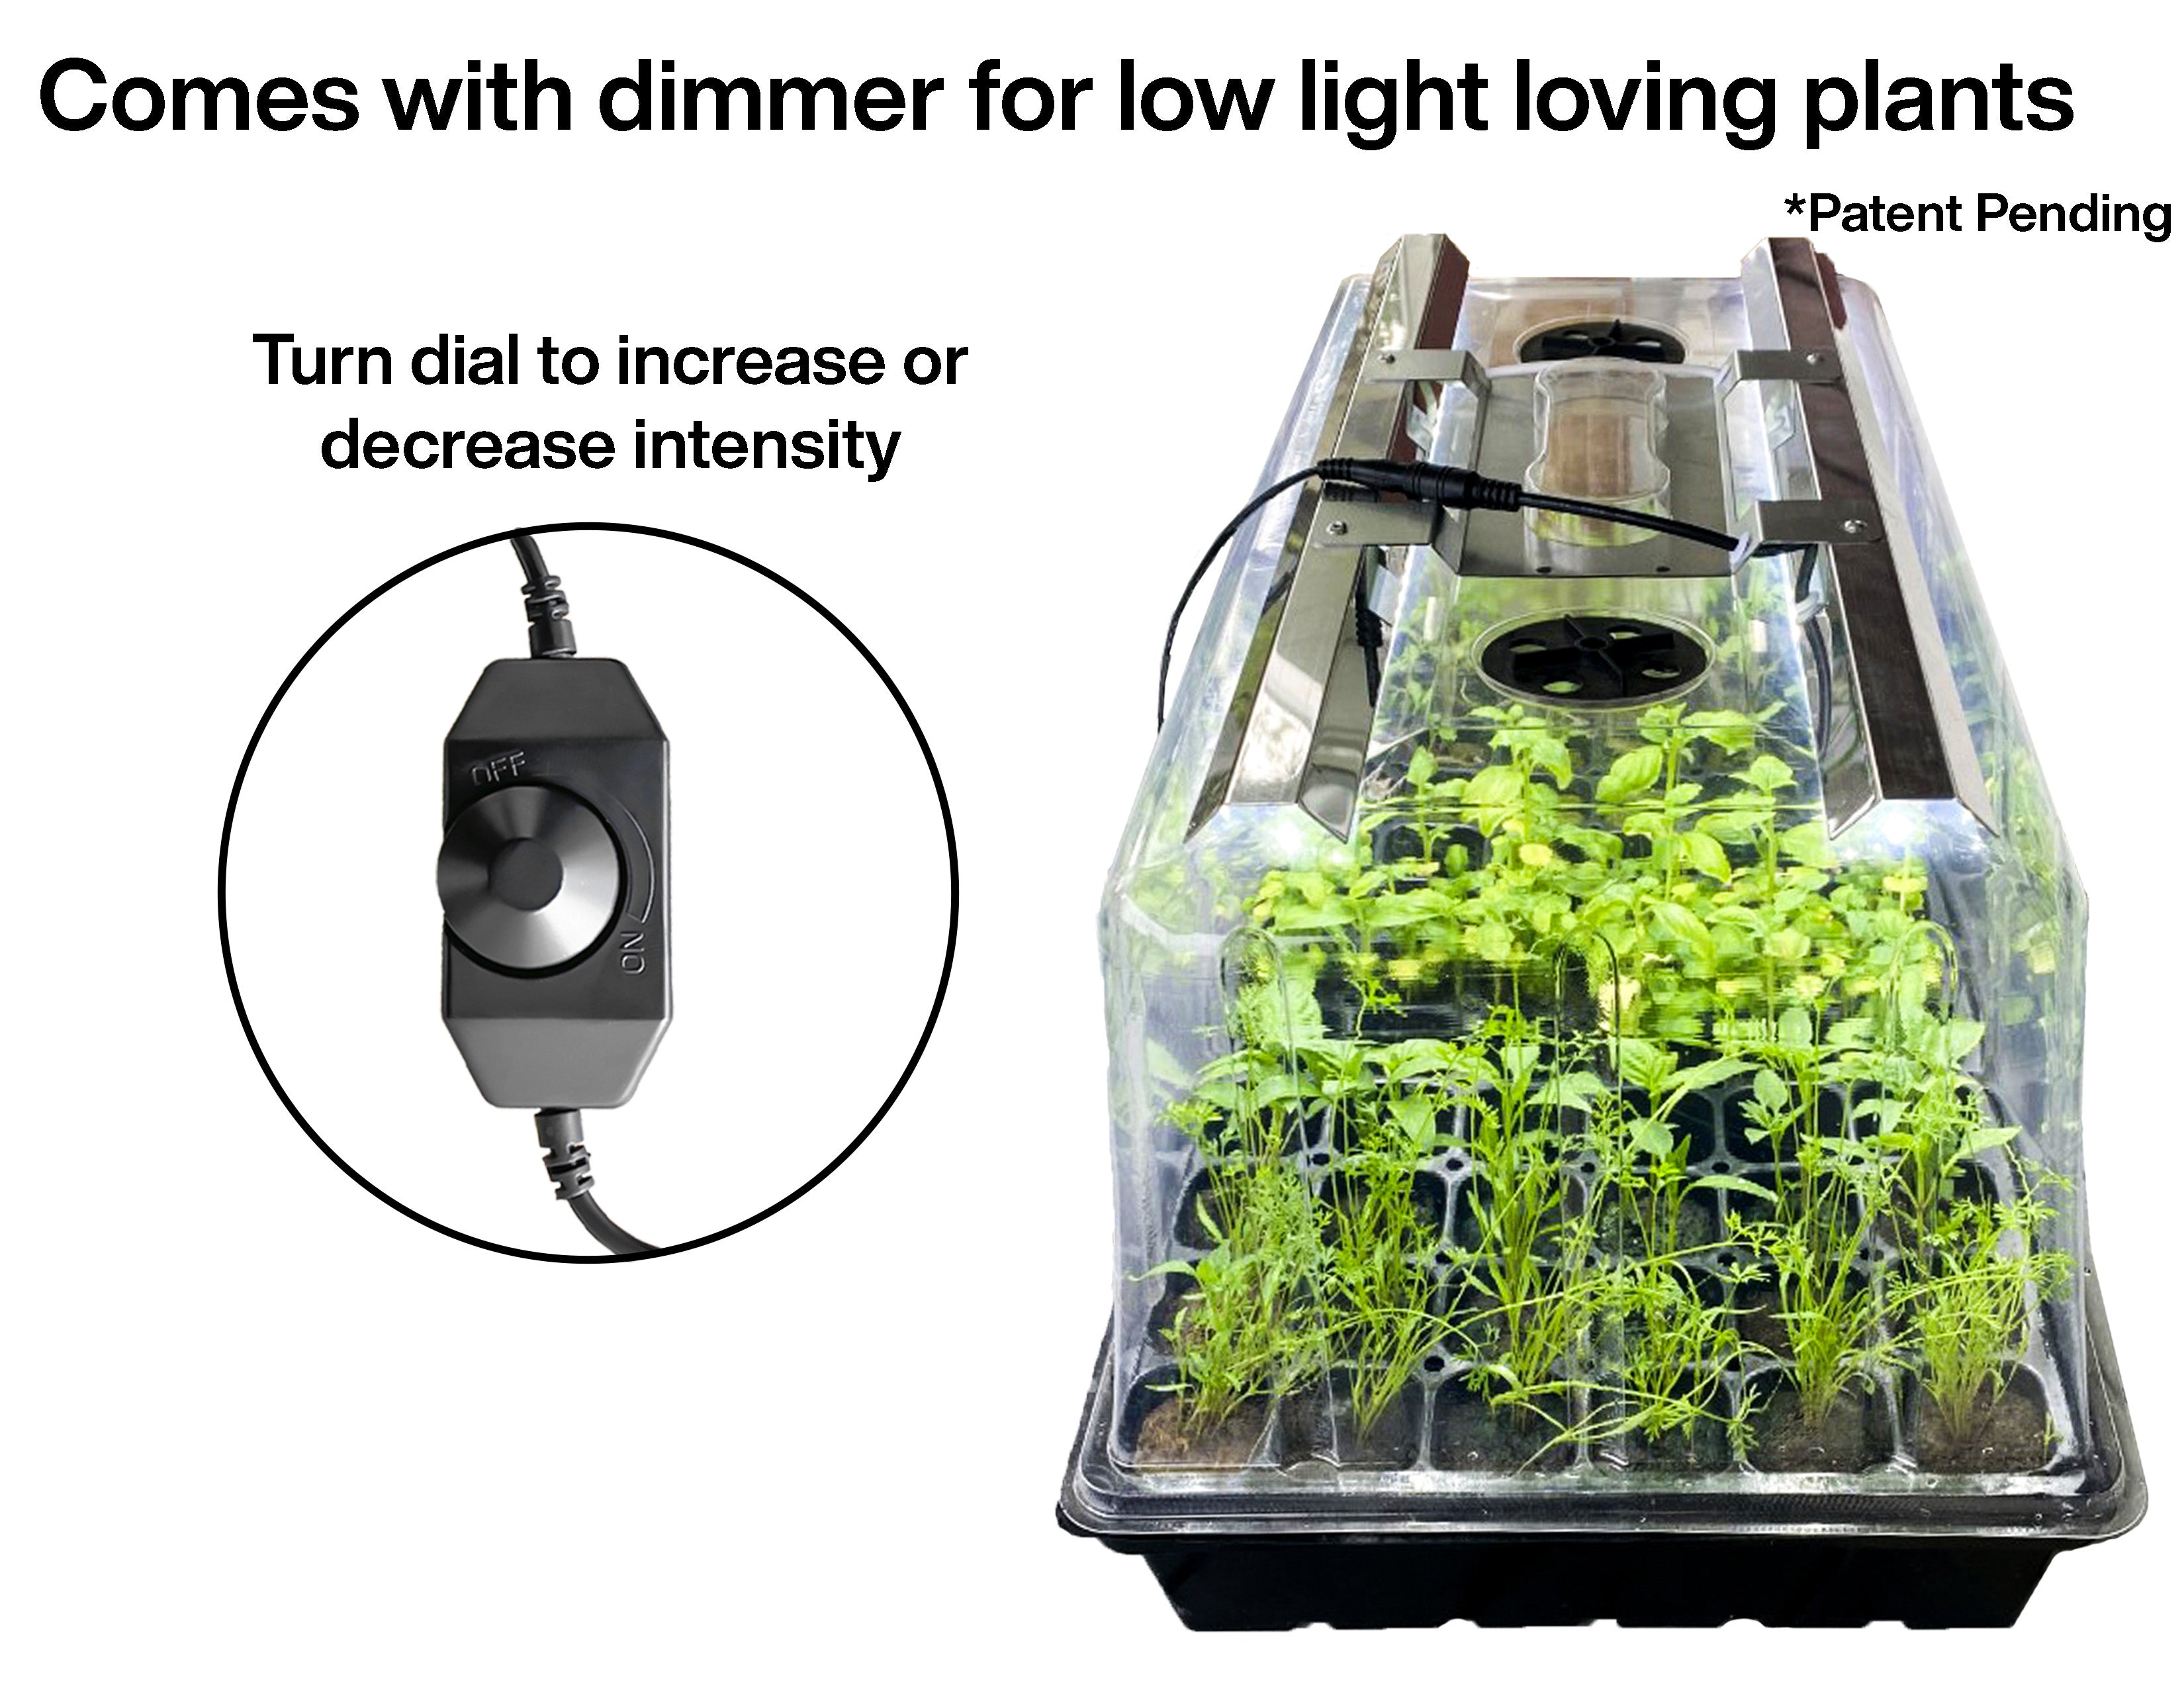 Viagrow Seedling Station Deluxe Kit with LED grow light, propagation dome, 4x durable seedling tray, 50 coir seedling starters & heat matt V1020SL-KIT-WHM